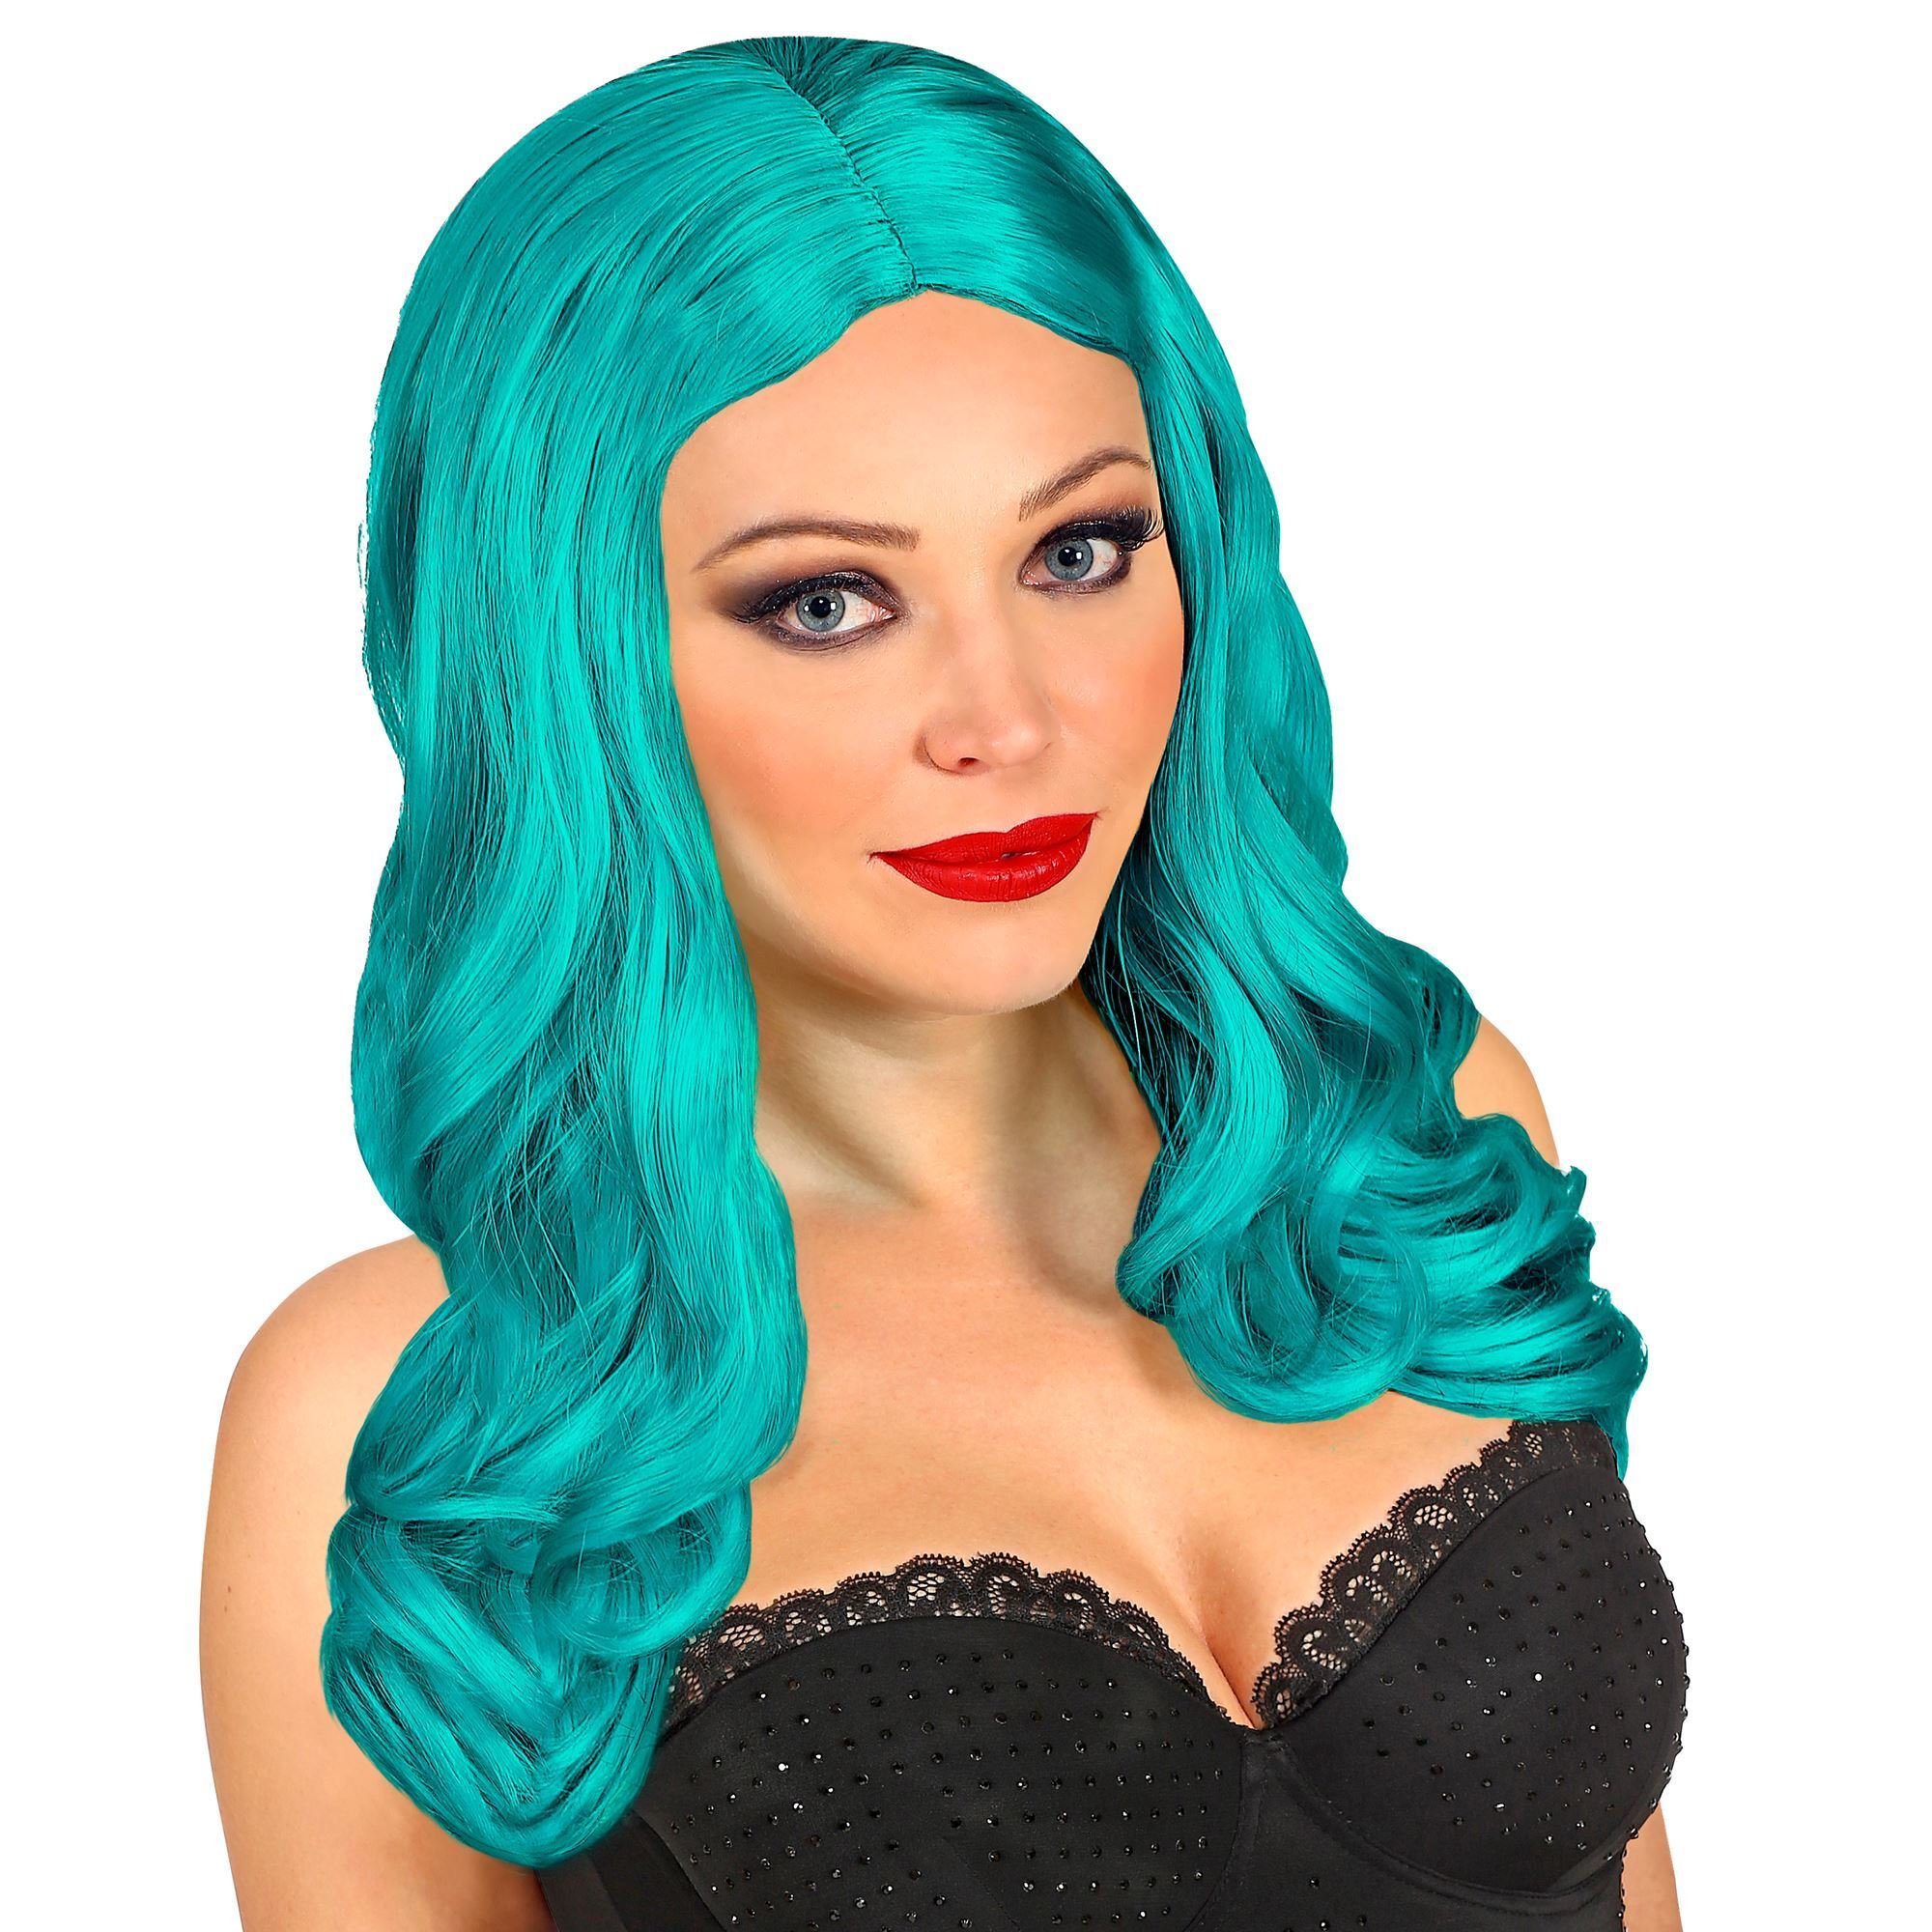 Roxy pruik turquoise lang haar